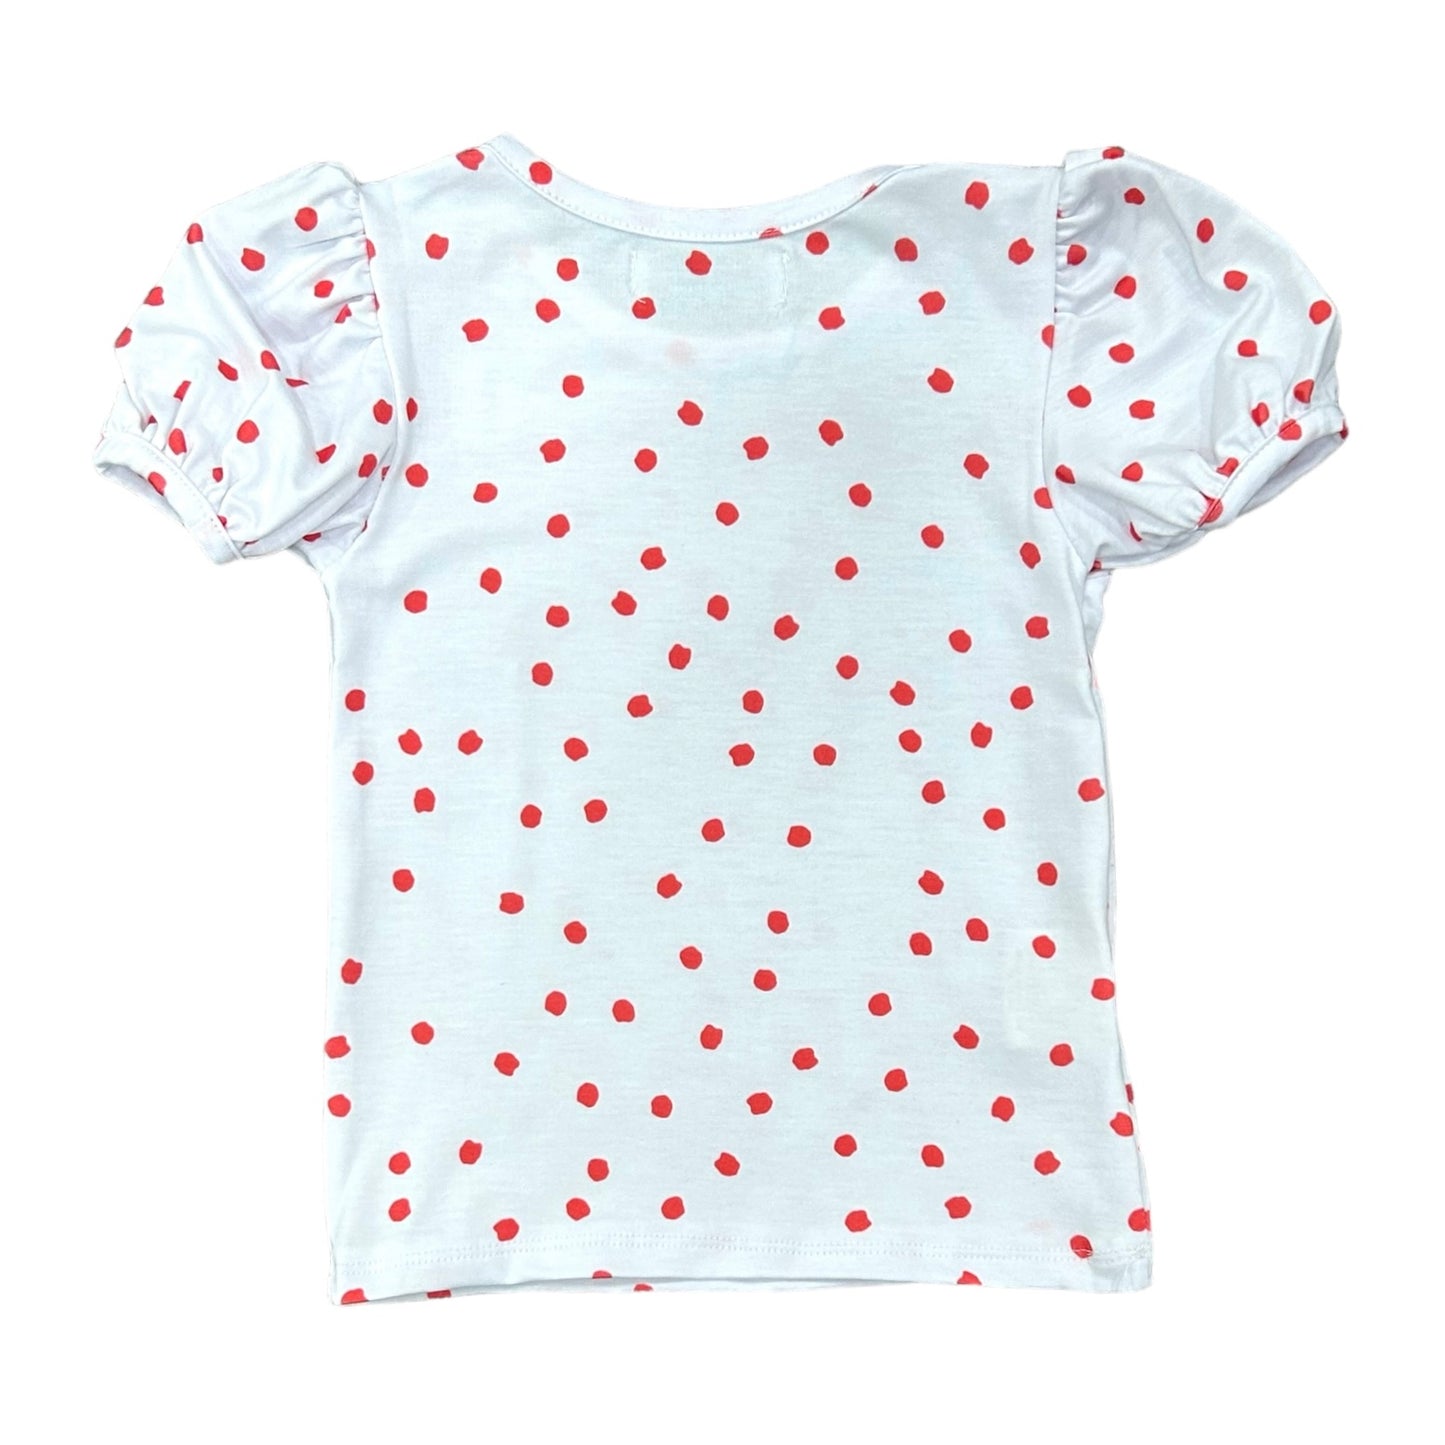 Puff Sleeve Tee - Red Dots